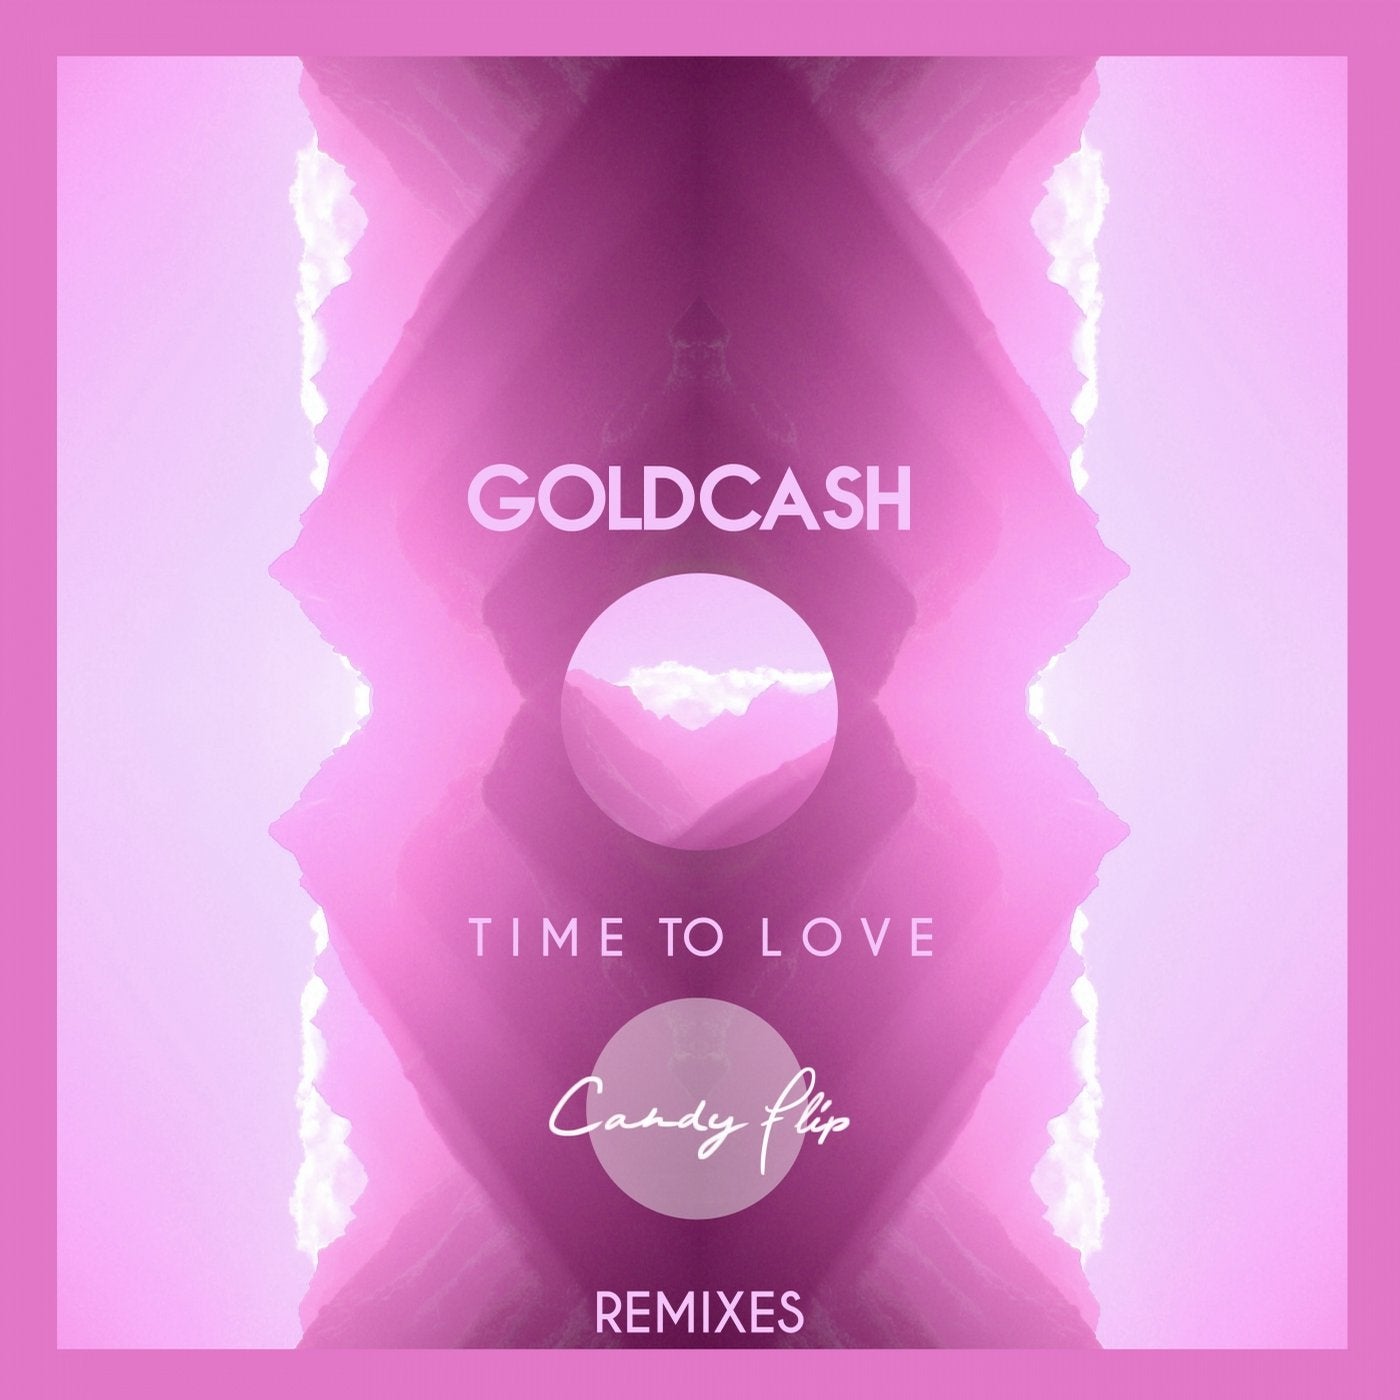 Your love remixes. Time to Love. To Love re. Lovely песня ремикс. Любовь песня Knzus Remix.